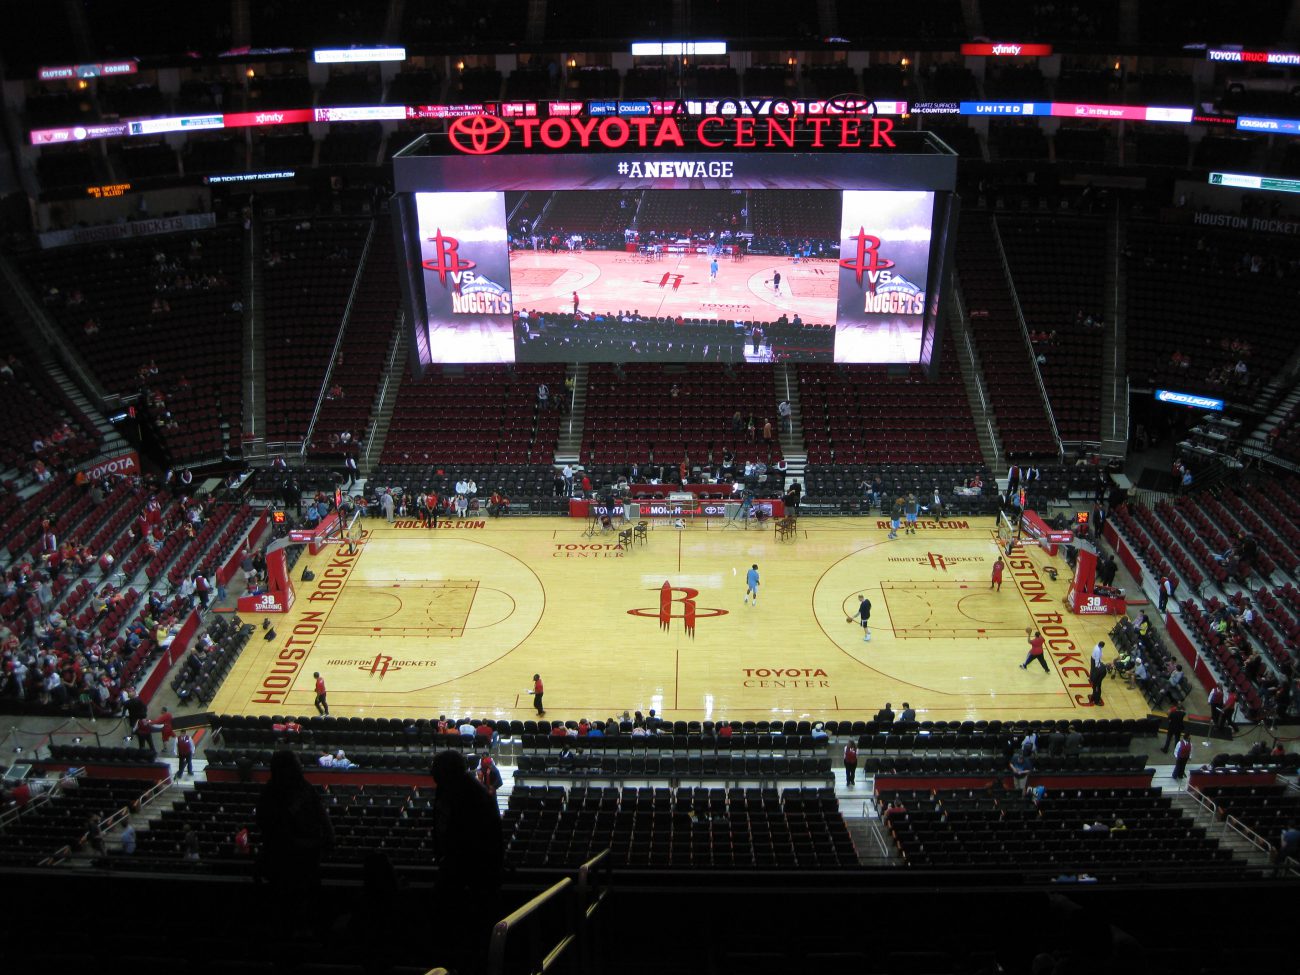 Houston Rockets: Toyota Center getting a $30 million renovation